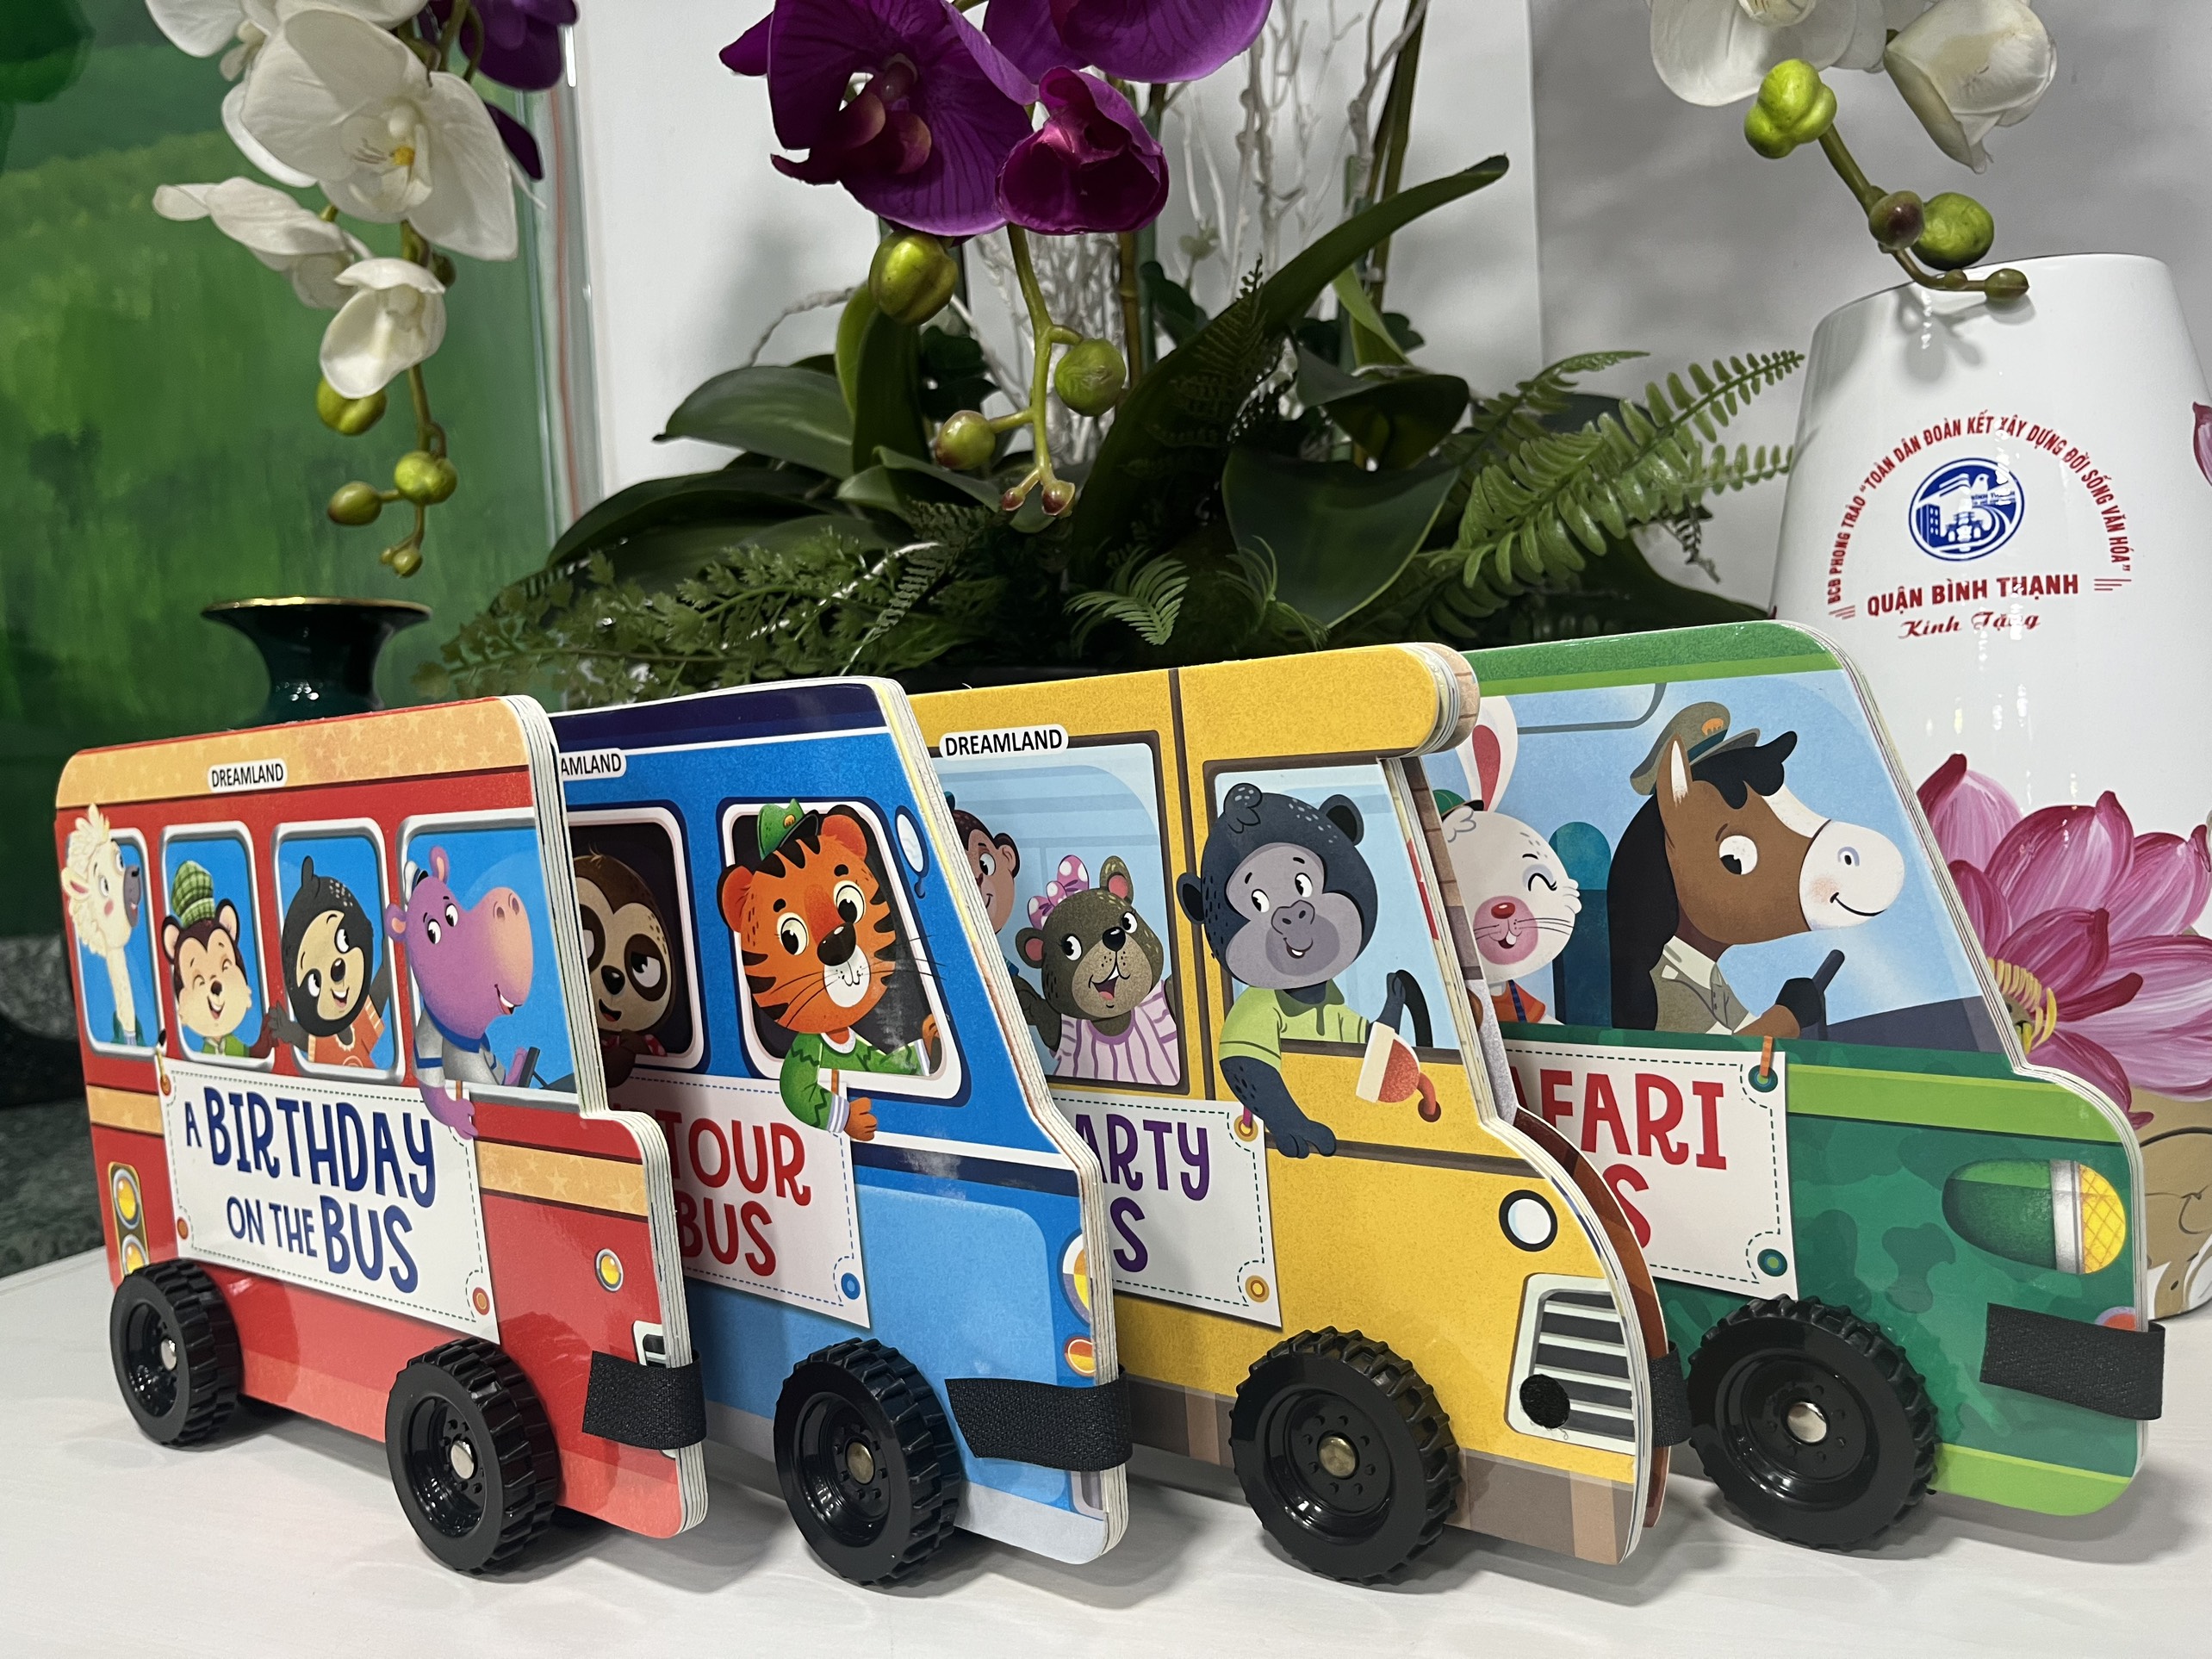 A Birthday On The Bus - A Shaped Board Book With Wheels (Bữa Tiệc Sinh Nhật Trên Xe Buýt)